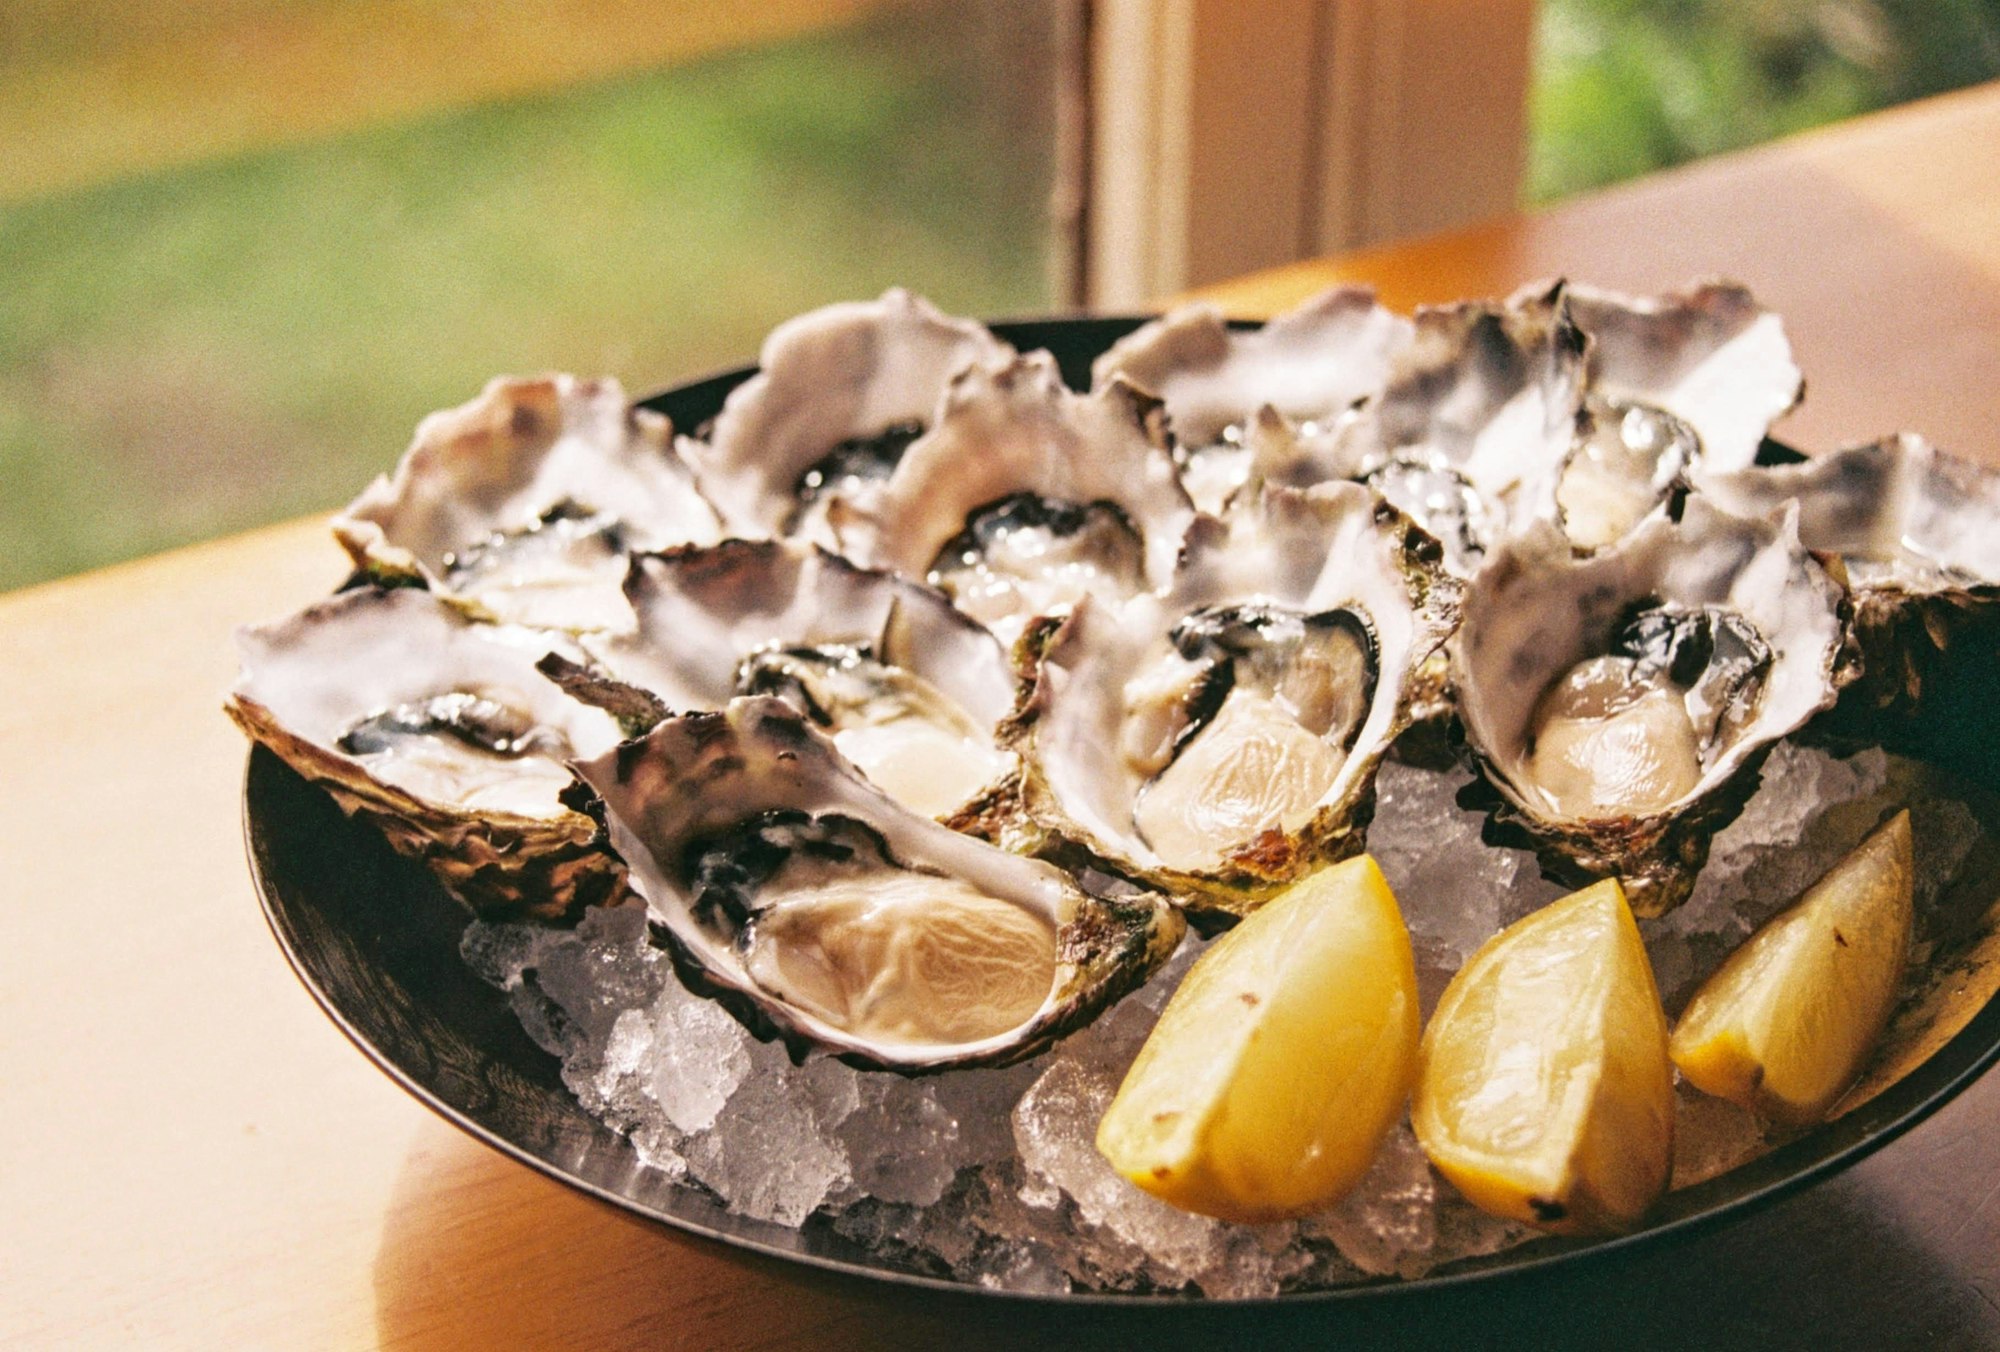 You should avoid eating oysters in Mazatlan